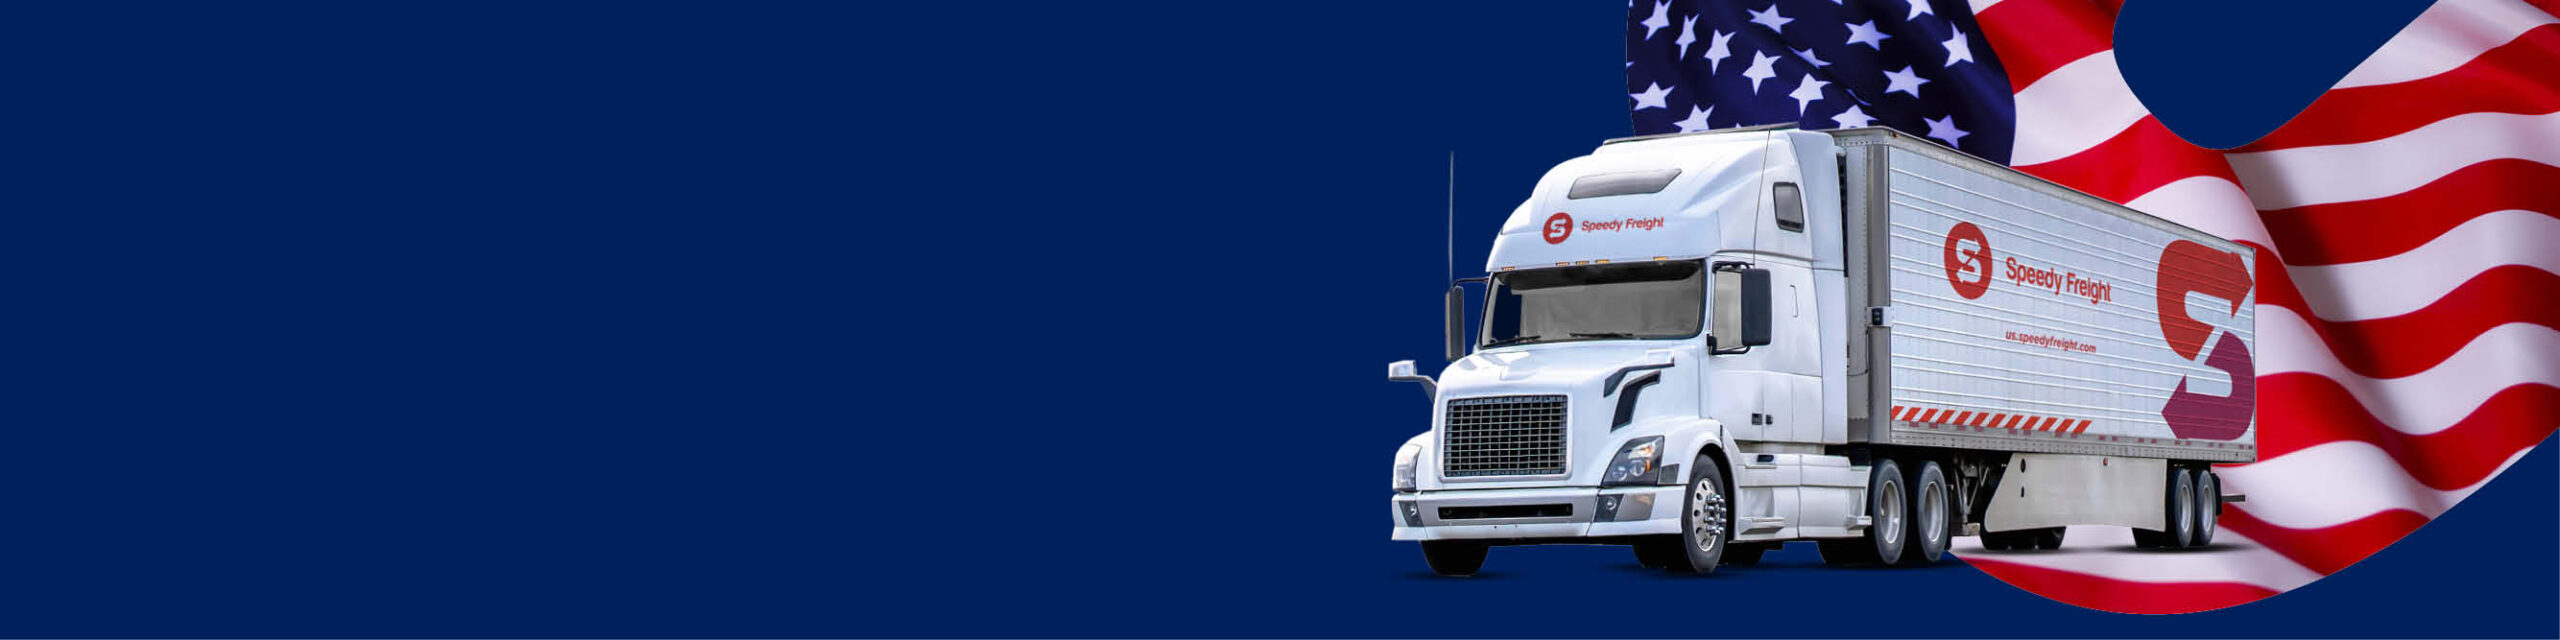 Speedy Freight Announces Major US Expansion